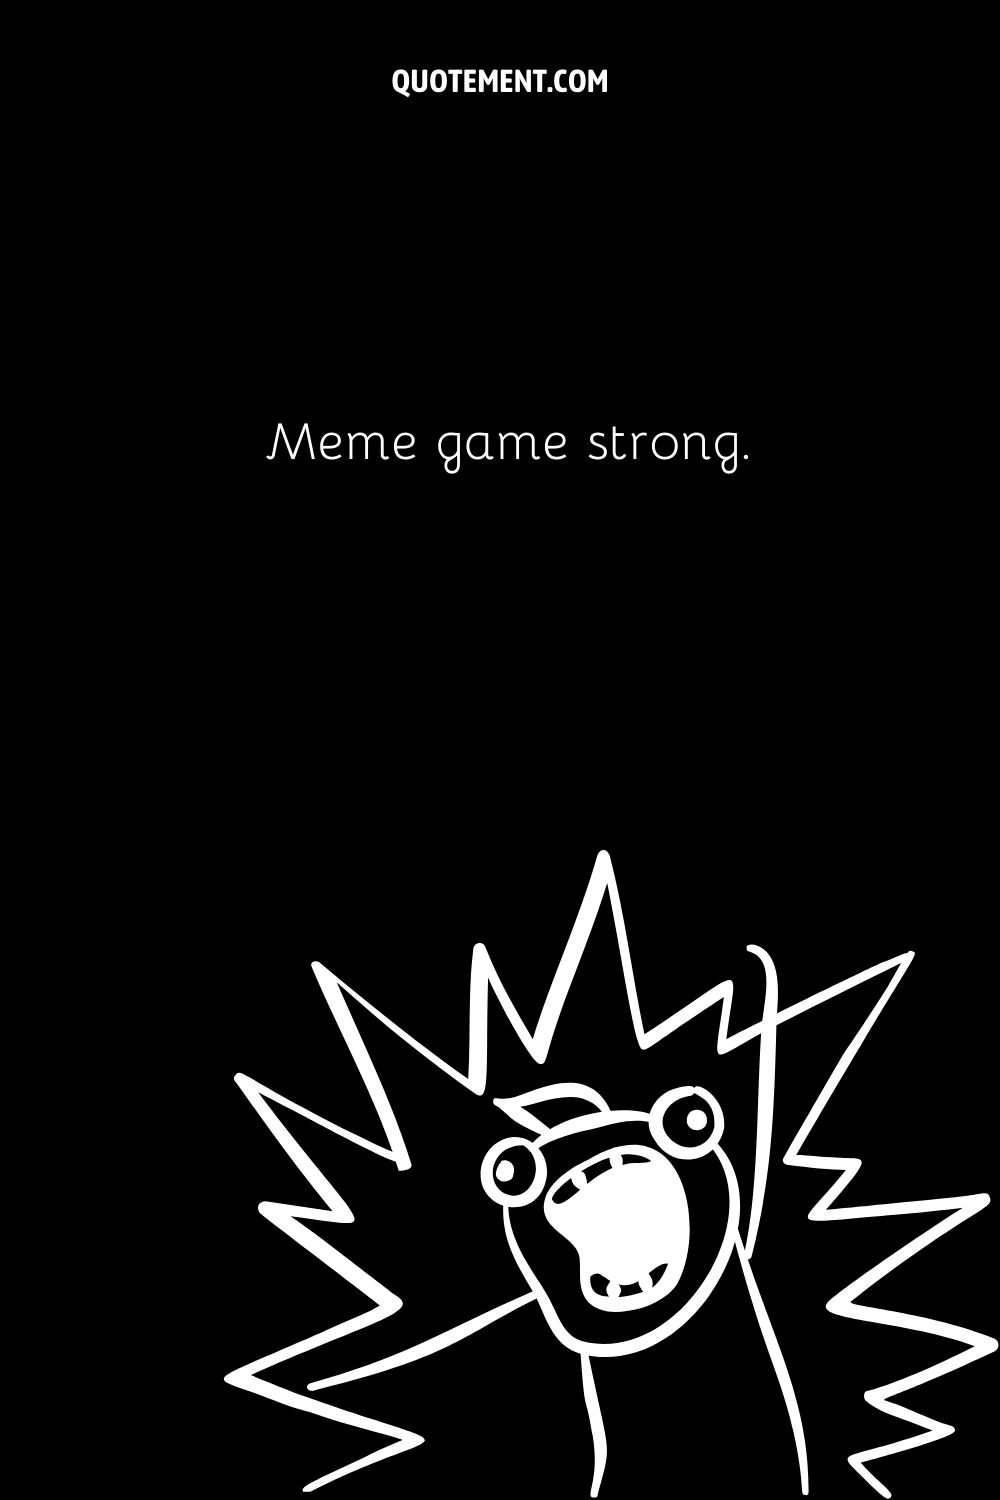 Meme game strong.